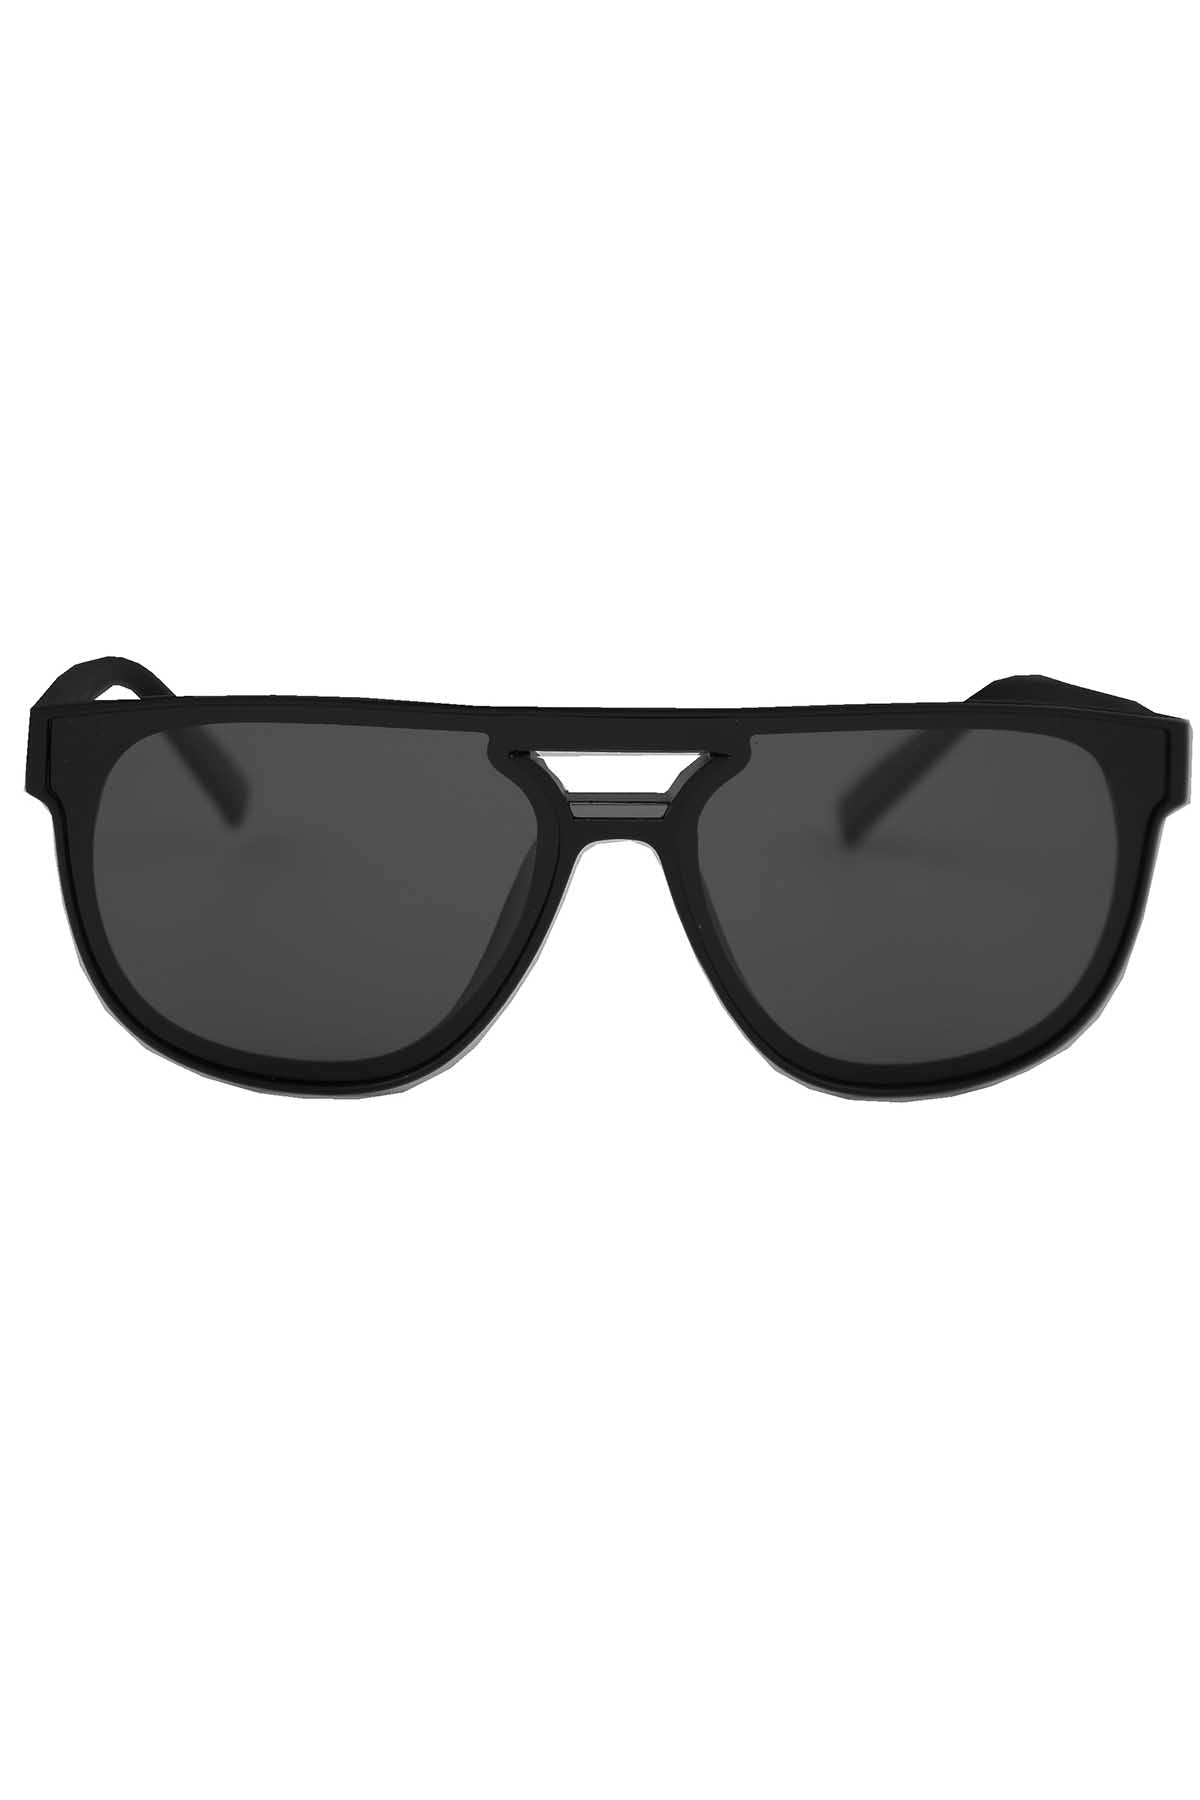 DIBI Black Dubai Sunglasses